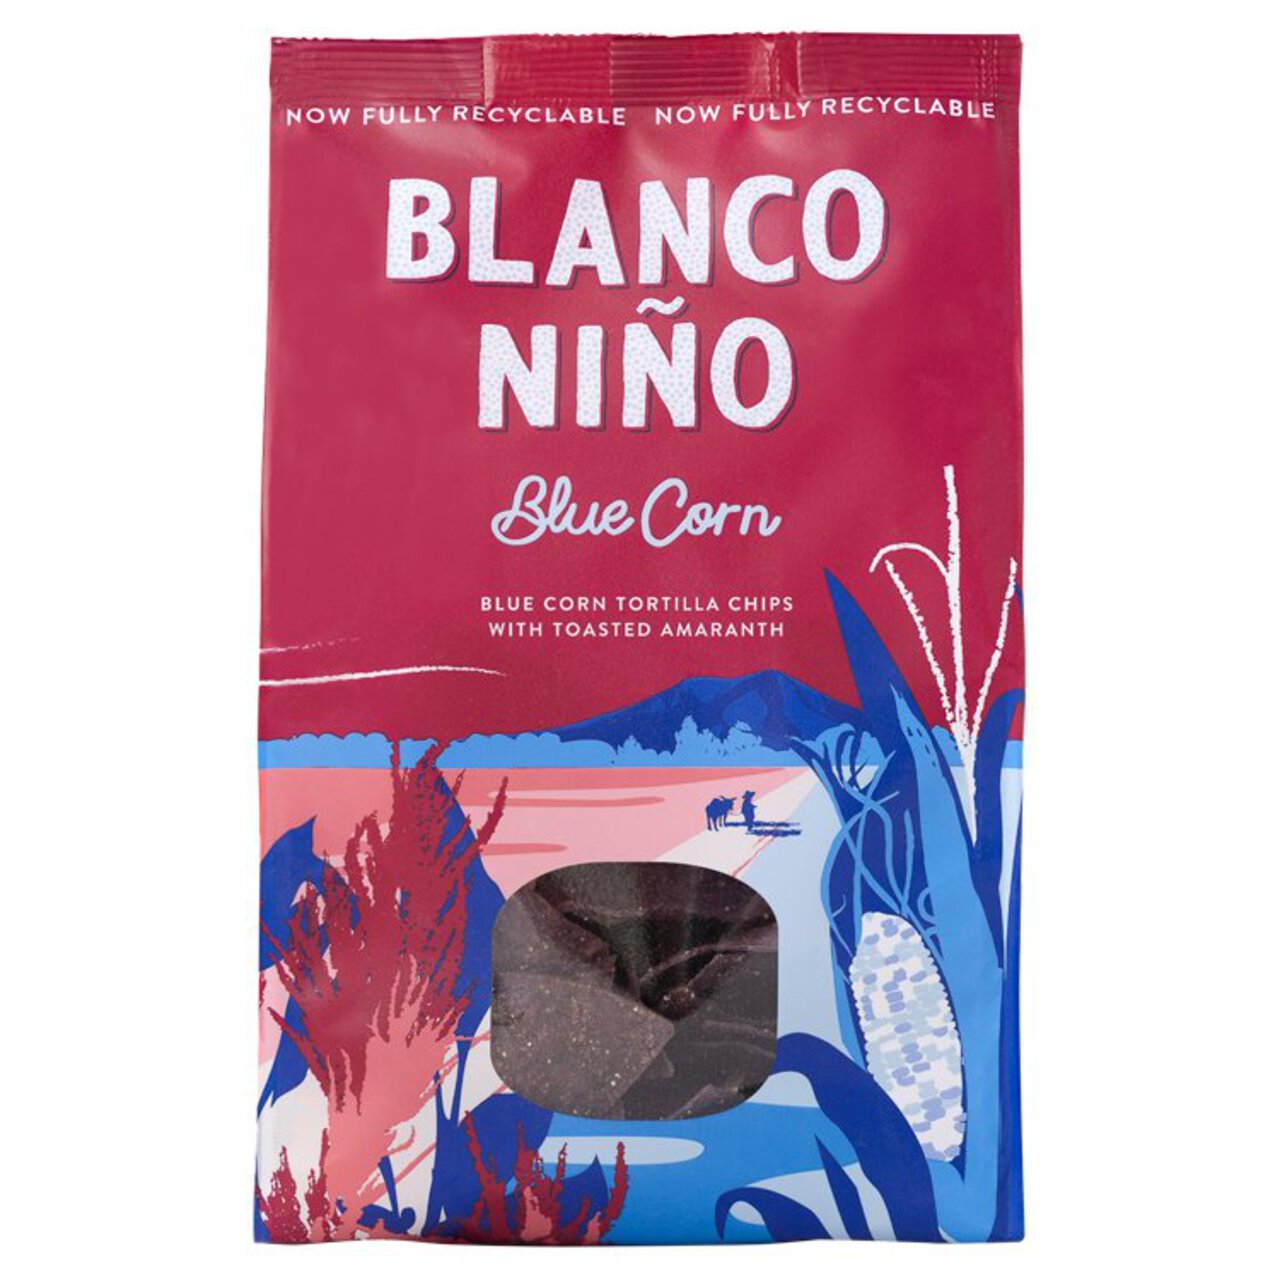 Blanco Nino Ancient Grain Blue Corn Tortilla Chips 170g